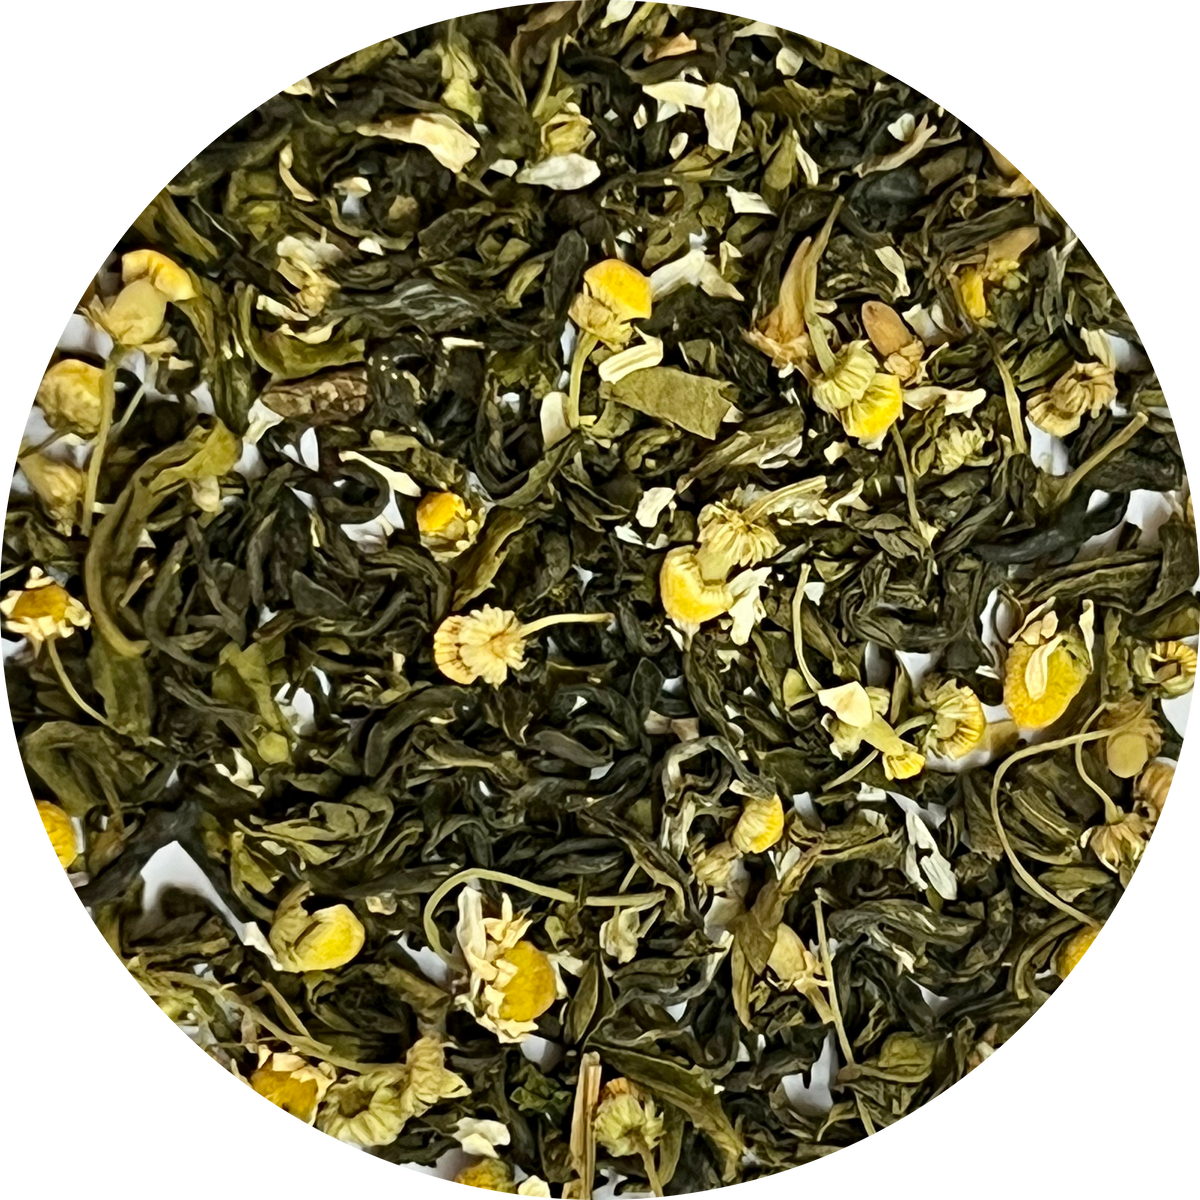 Chamomile green tea